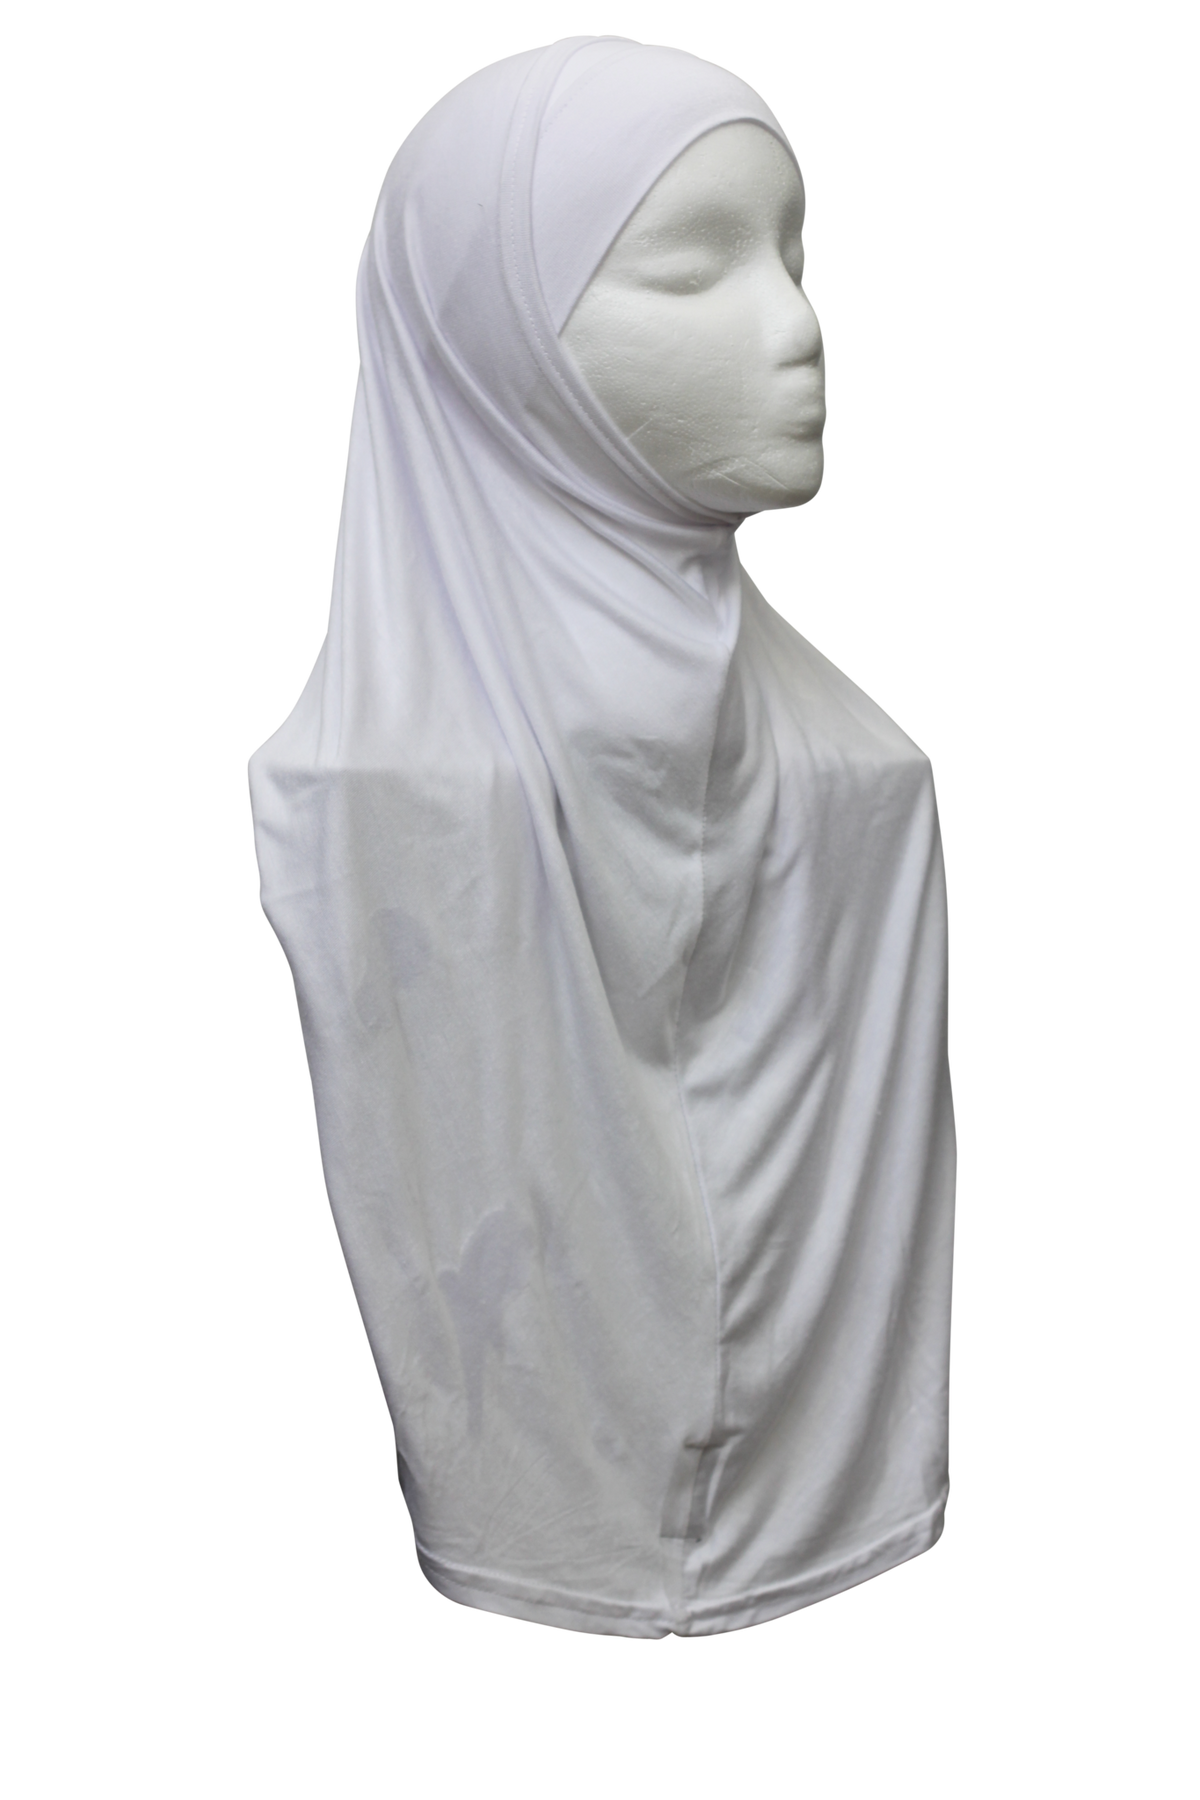 One Piece Slip-on Hijab - White